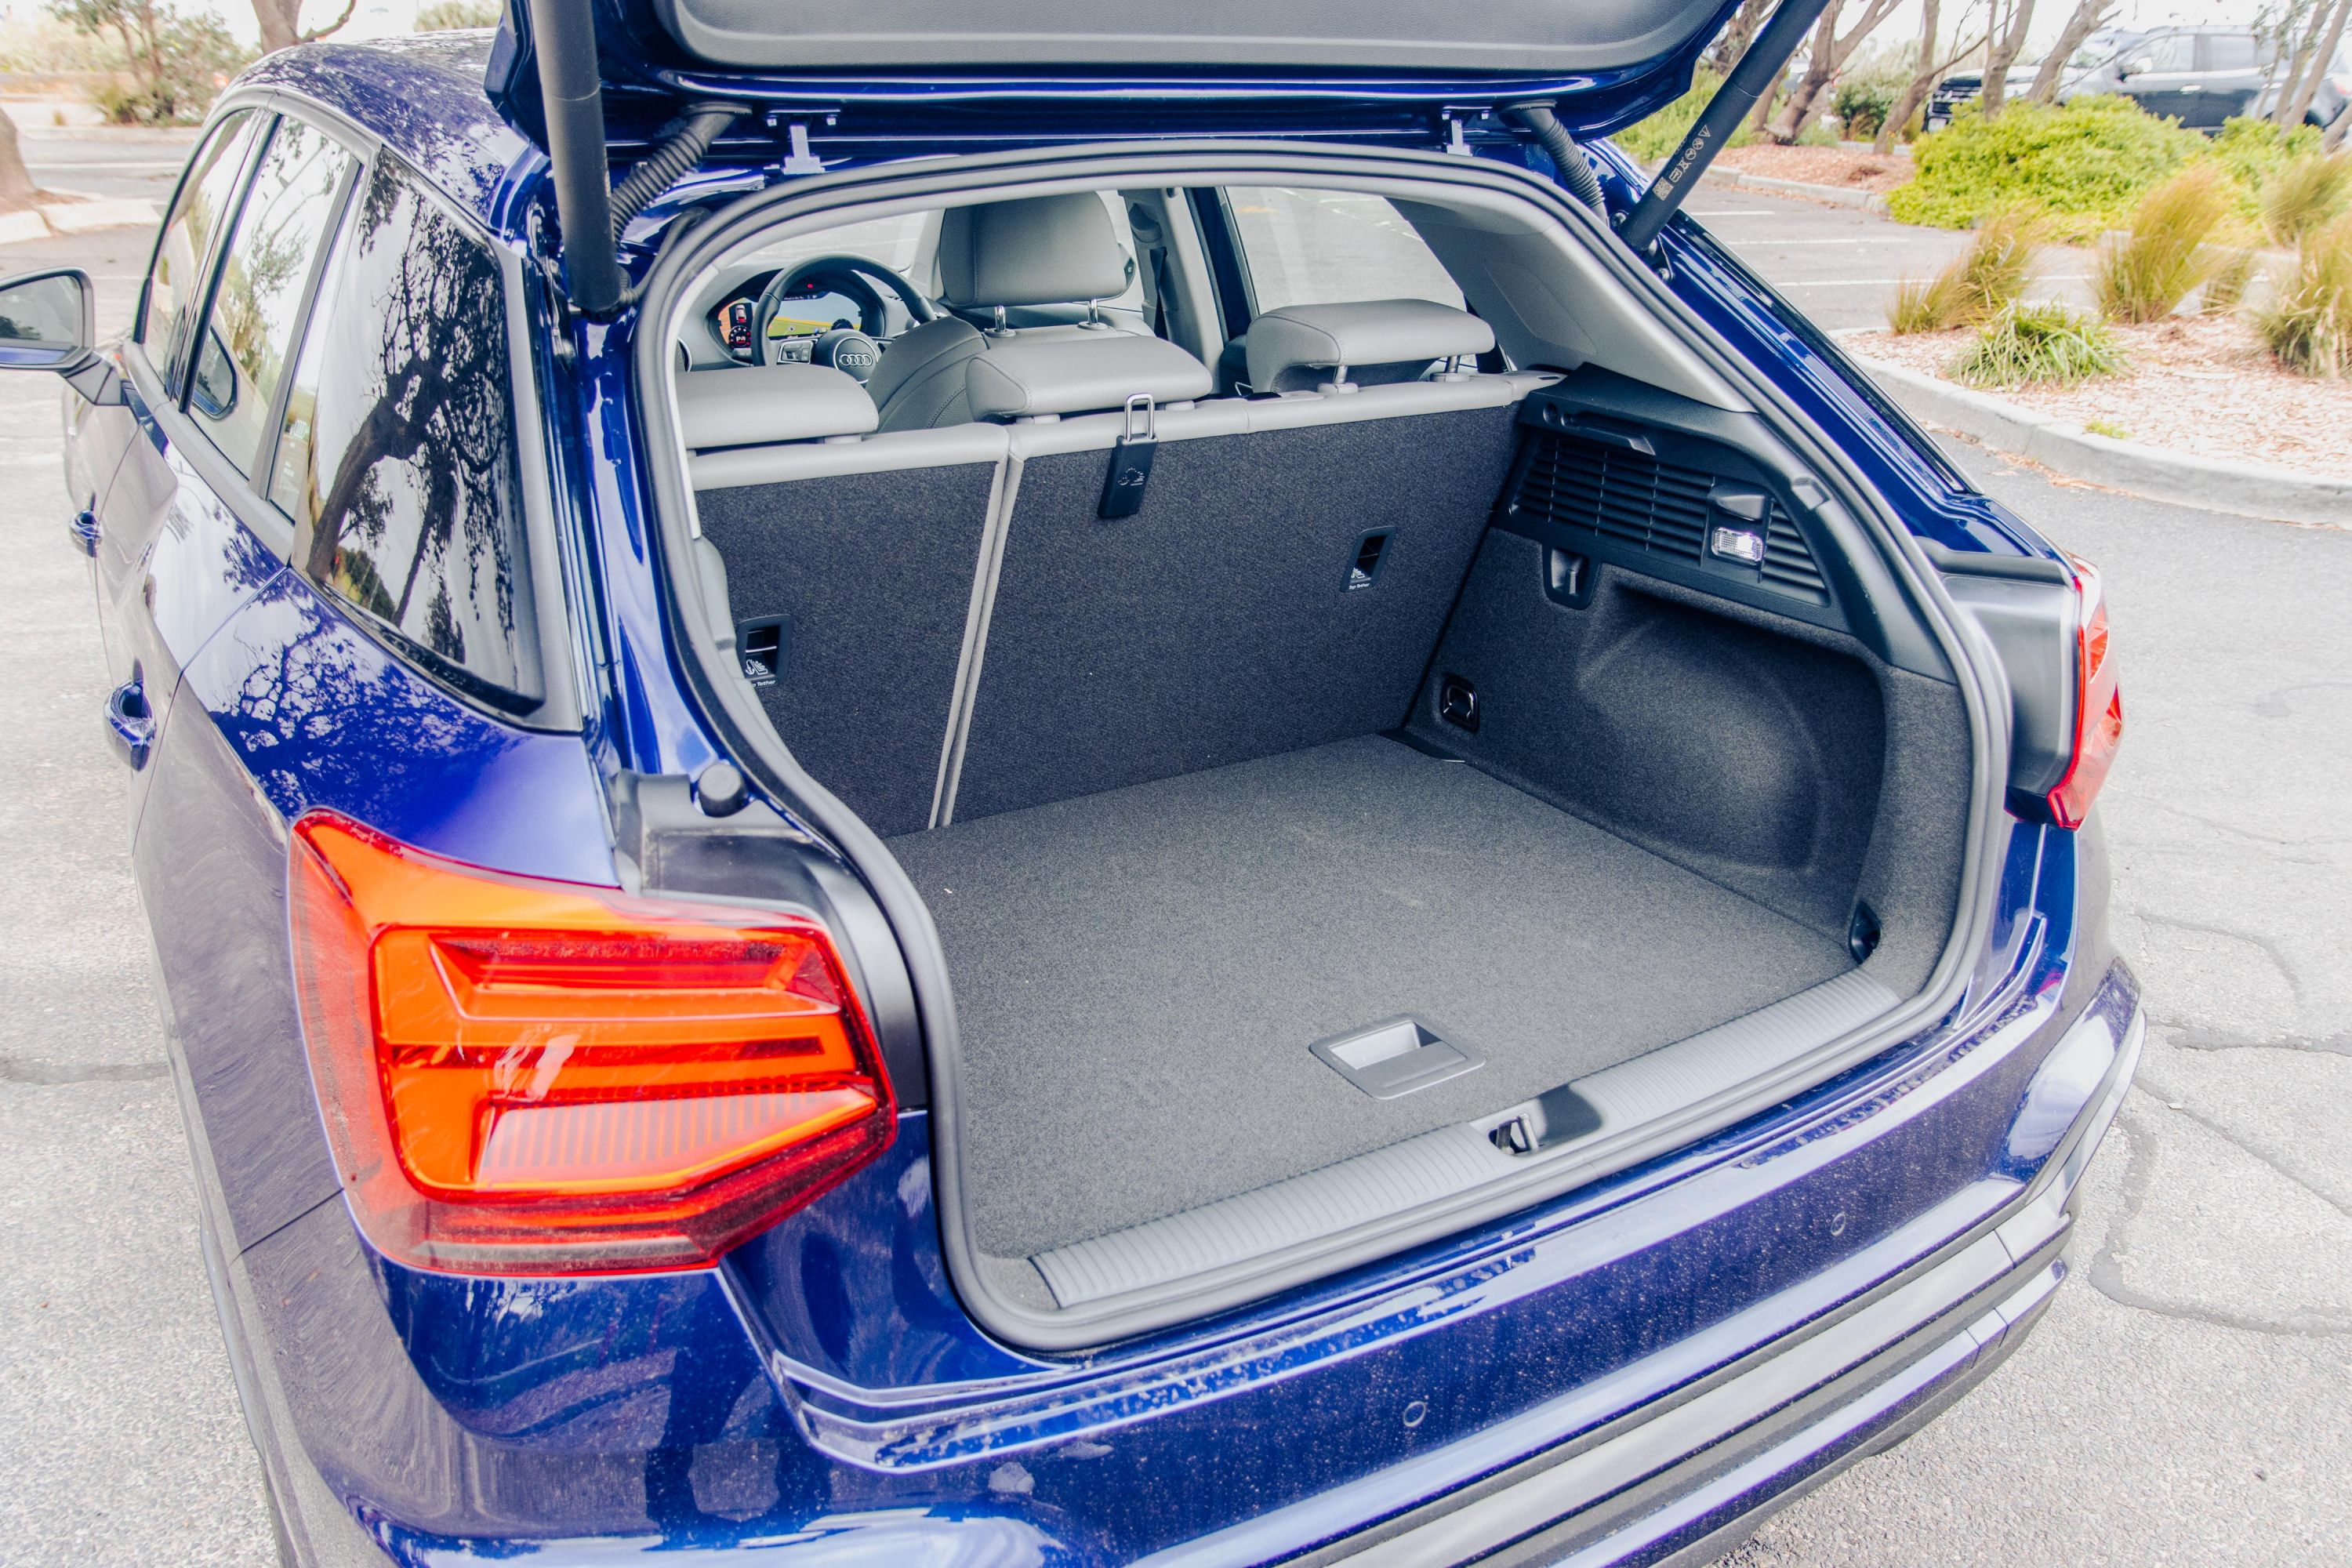 Audi Q2 dimensions, boot space and similars